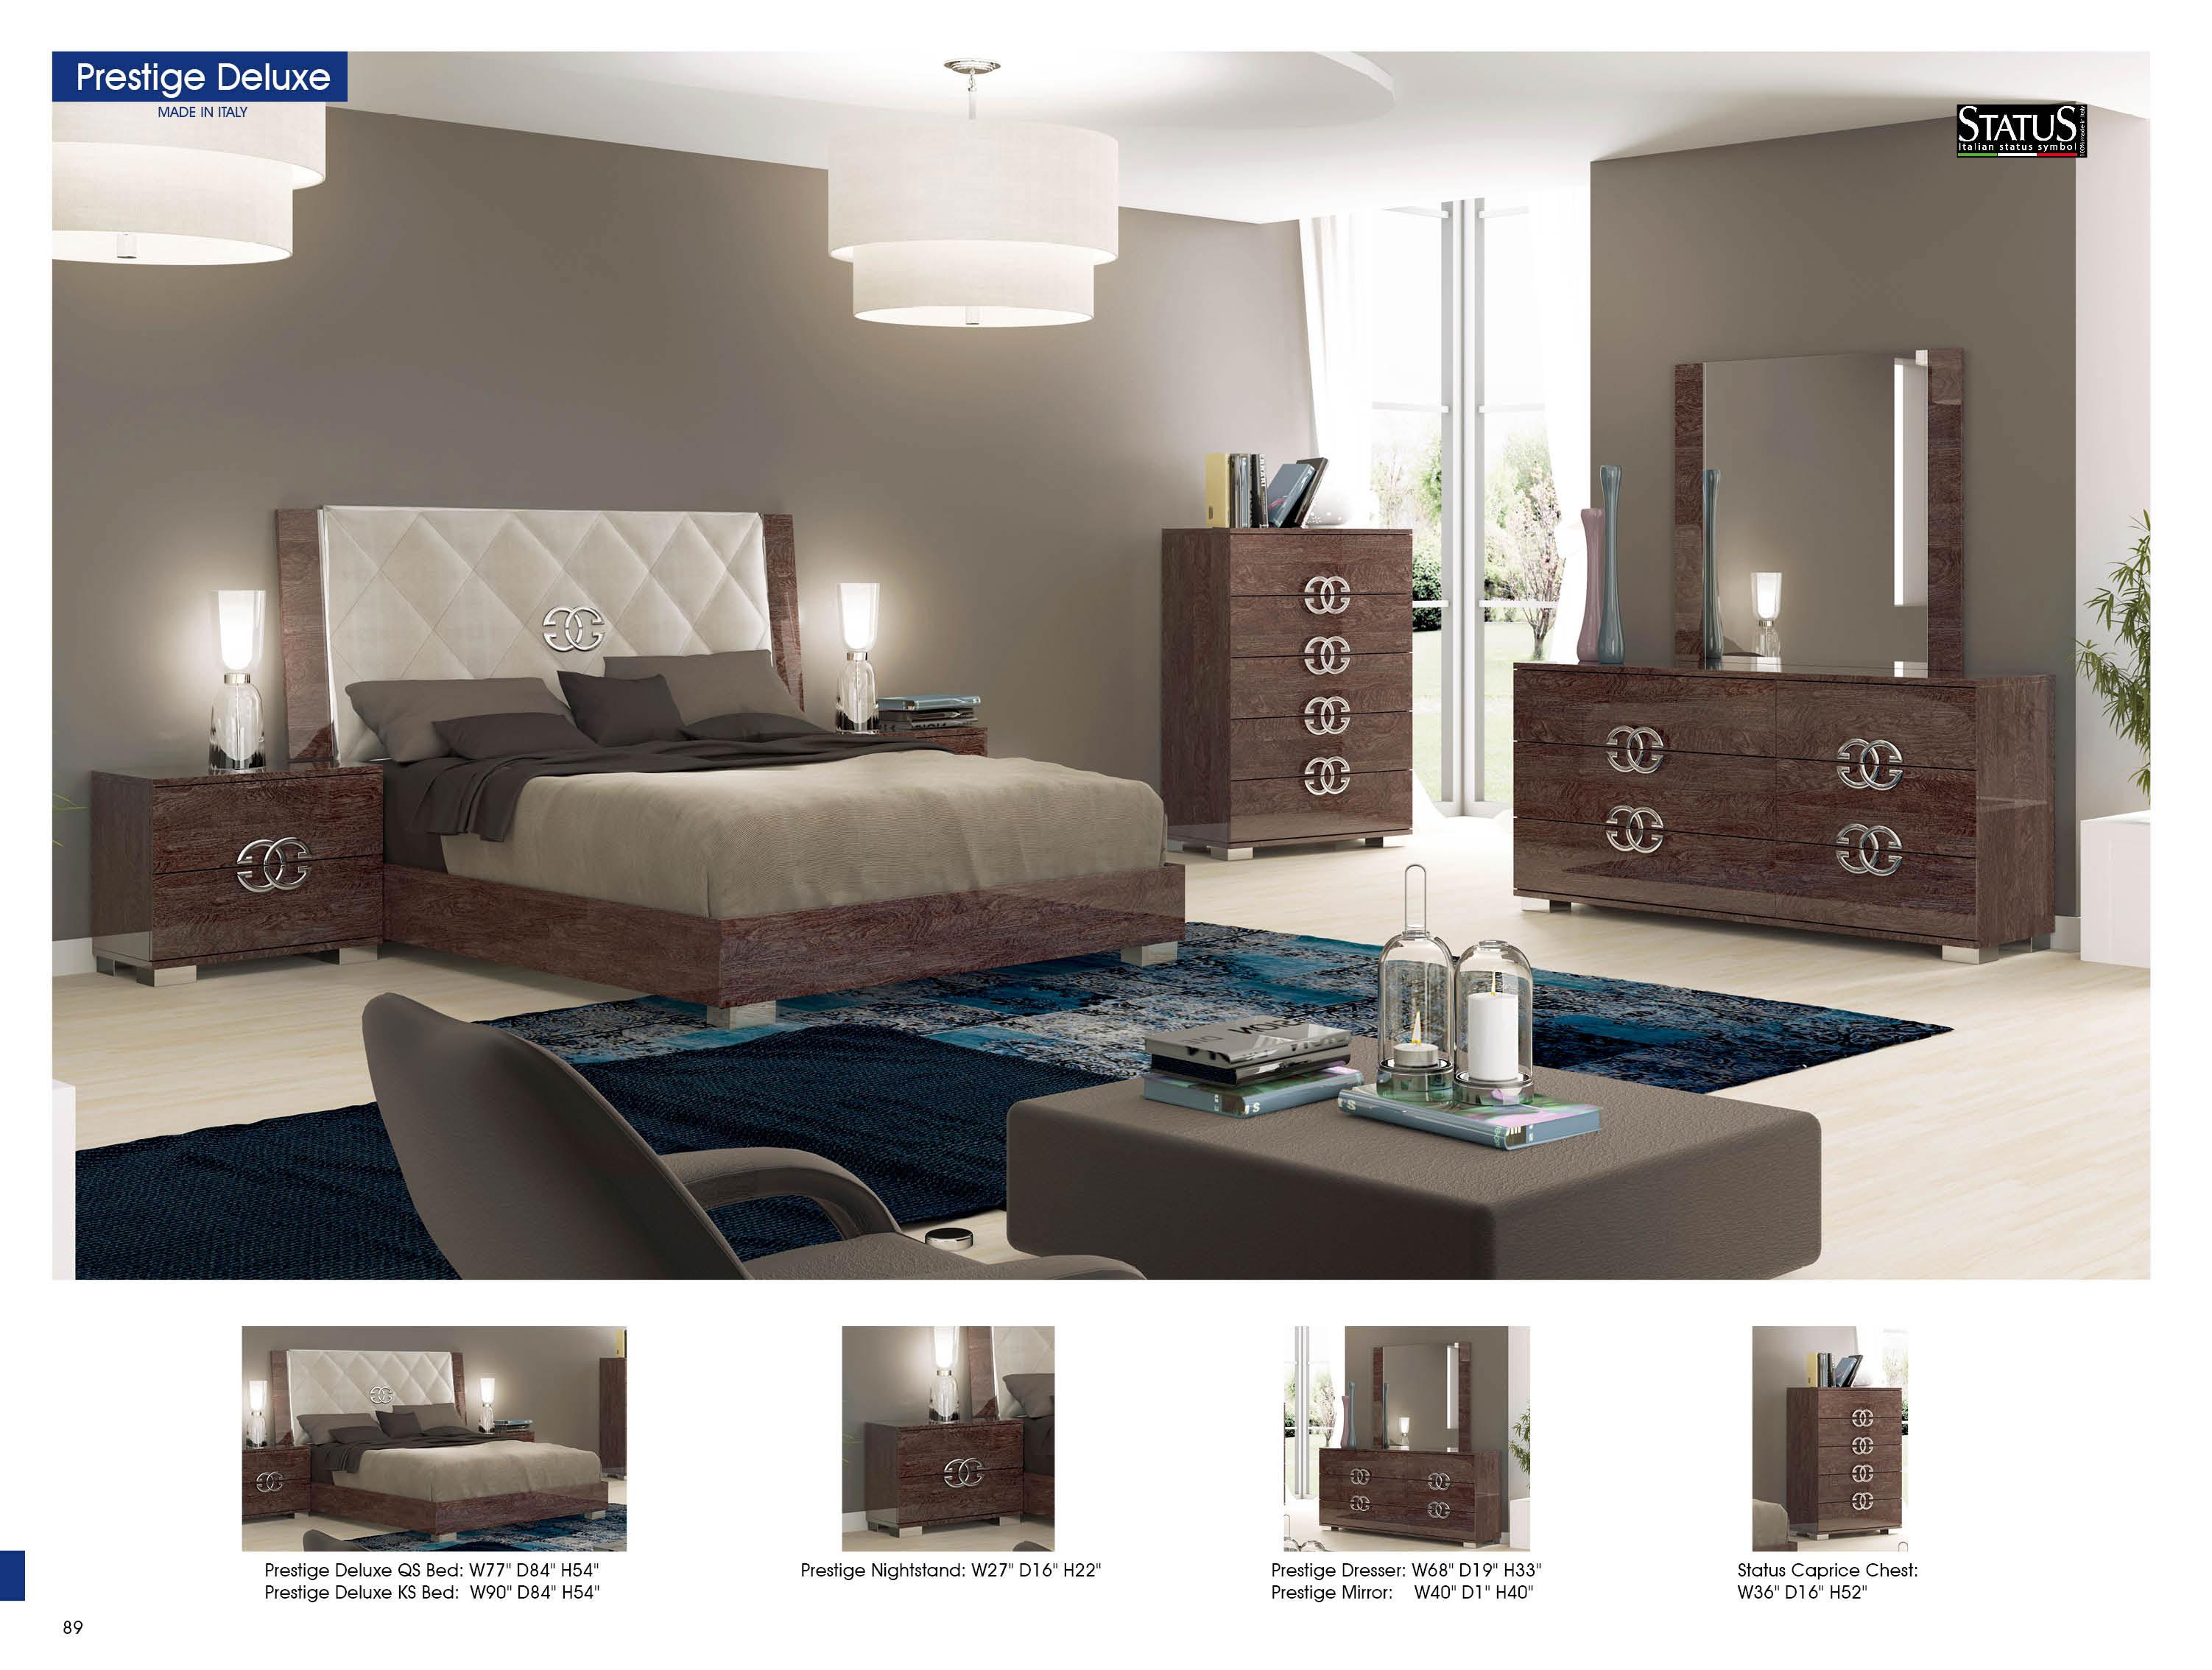 

    
PRESTIGE-DELUXE-BED-EK-2N-3PC Glossy Finish Upholstered Headboard King Bedroom Set 3Pcs Made in Italy ESF Prestige Deluxe
